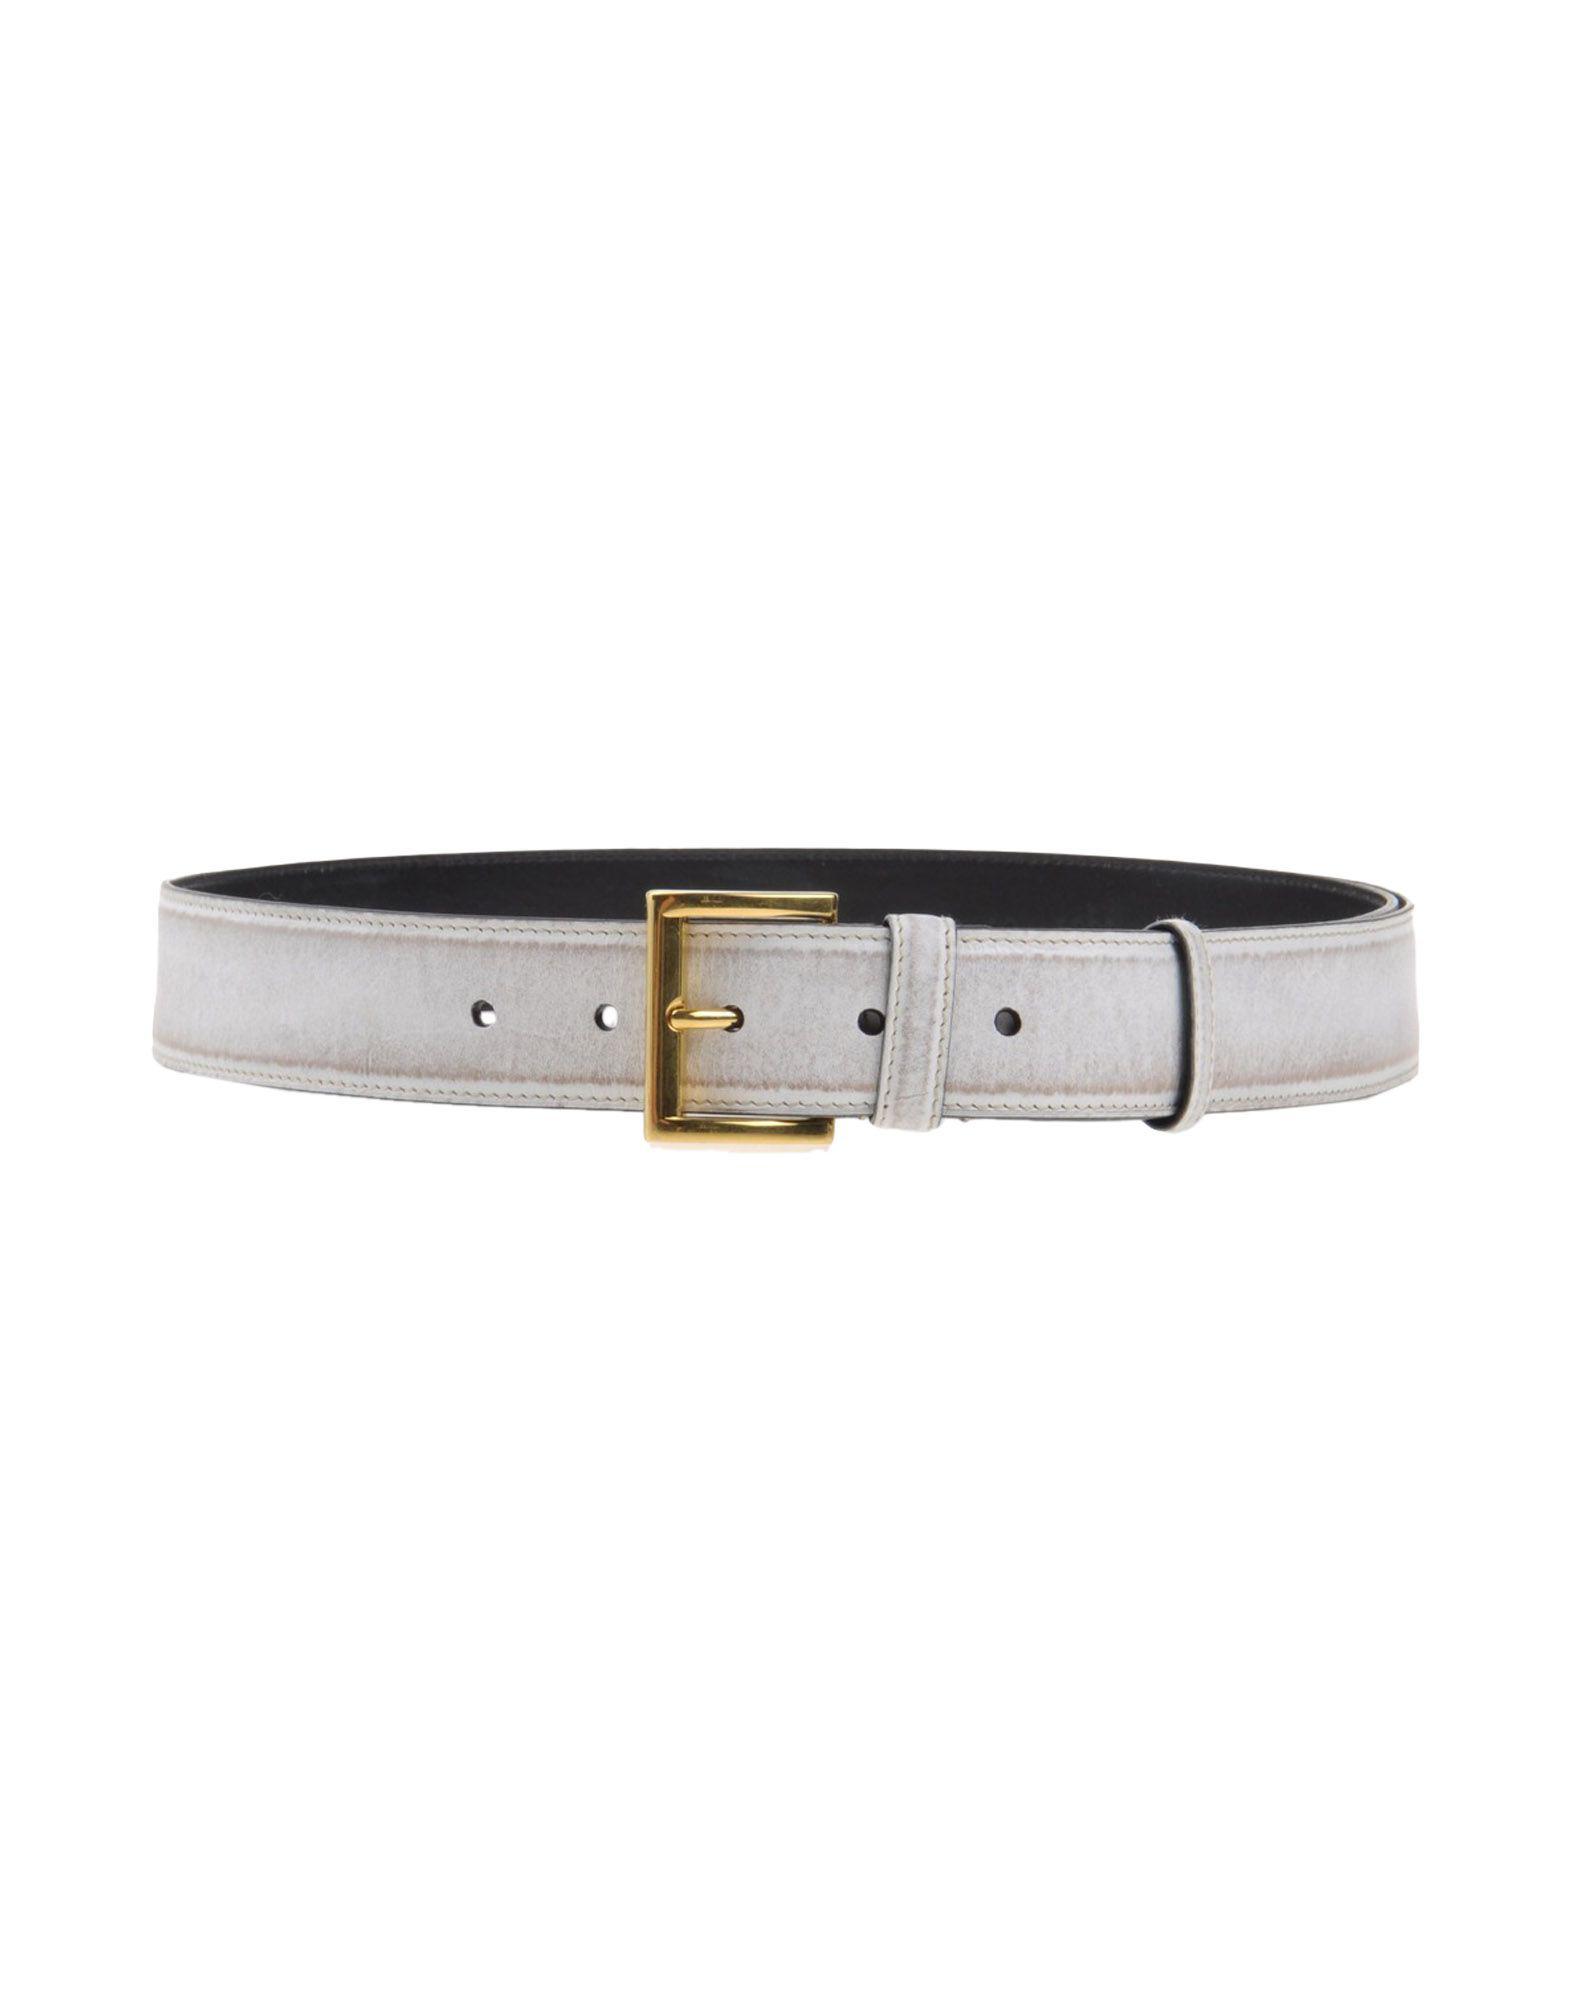 Prada Leather Belt in White - Lyst